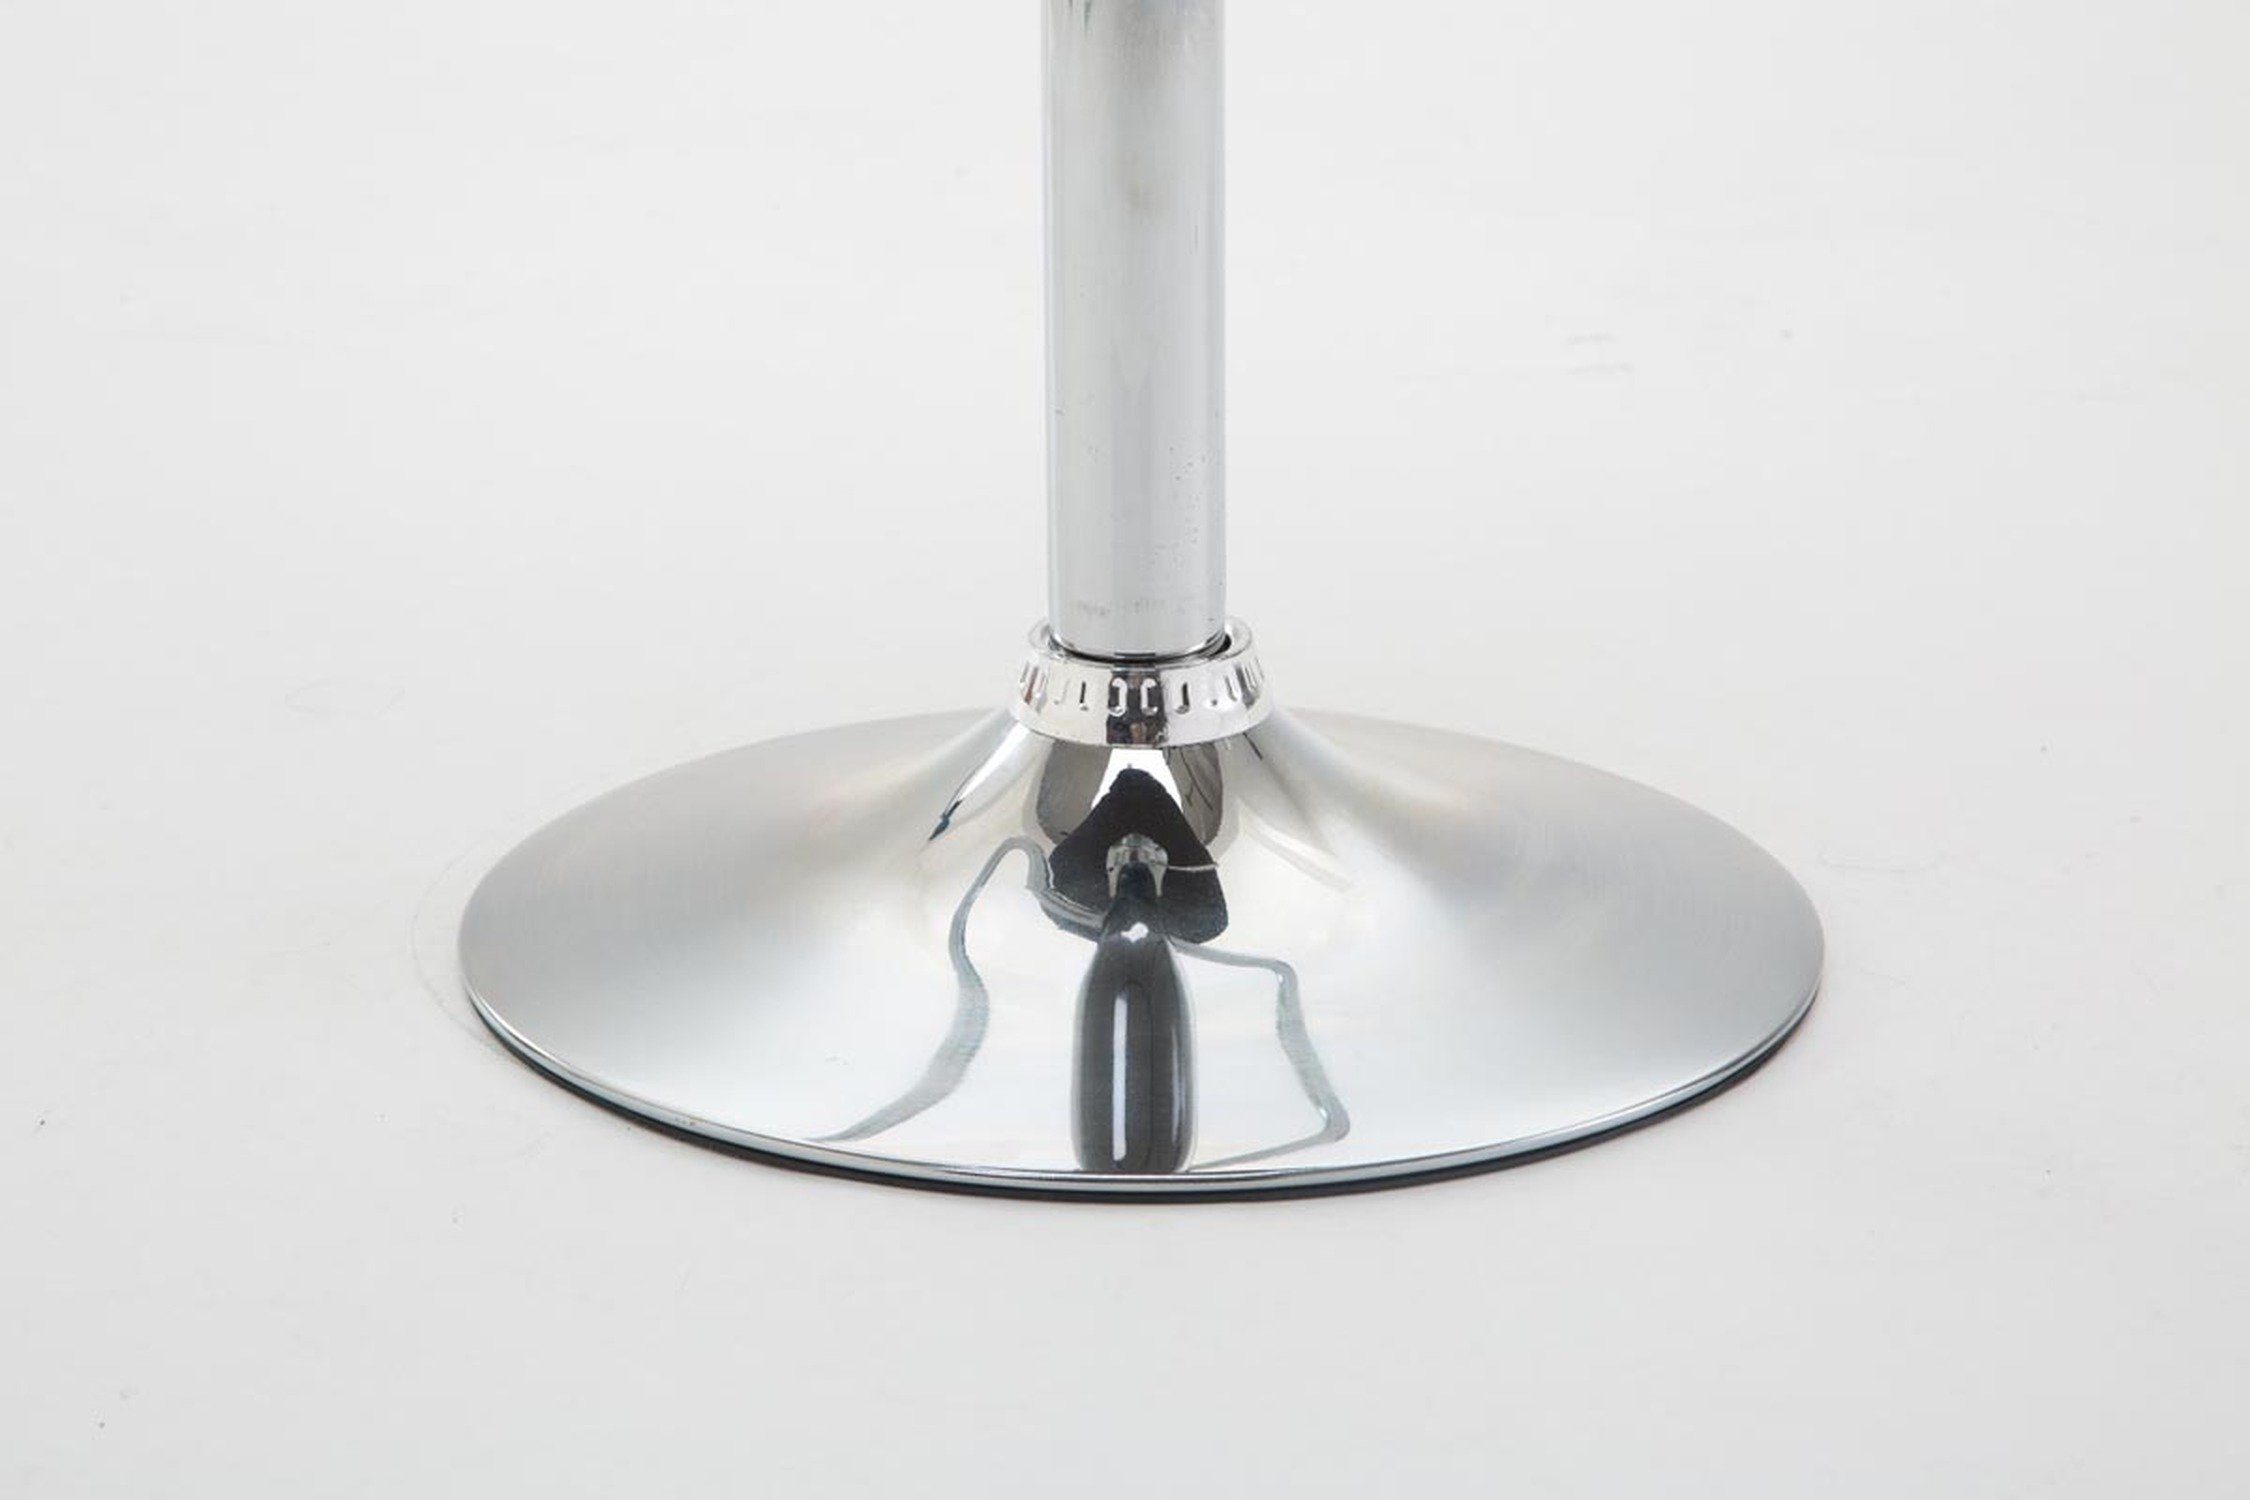 höhenverstellbar Taupe Theke & Sitzfläche: - Stoff Stahl chromfarbener Barhocker Hocker - - Shangrila drehbar (Barstuhl - Tresenhocker), Küche für TPFLiving 360°